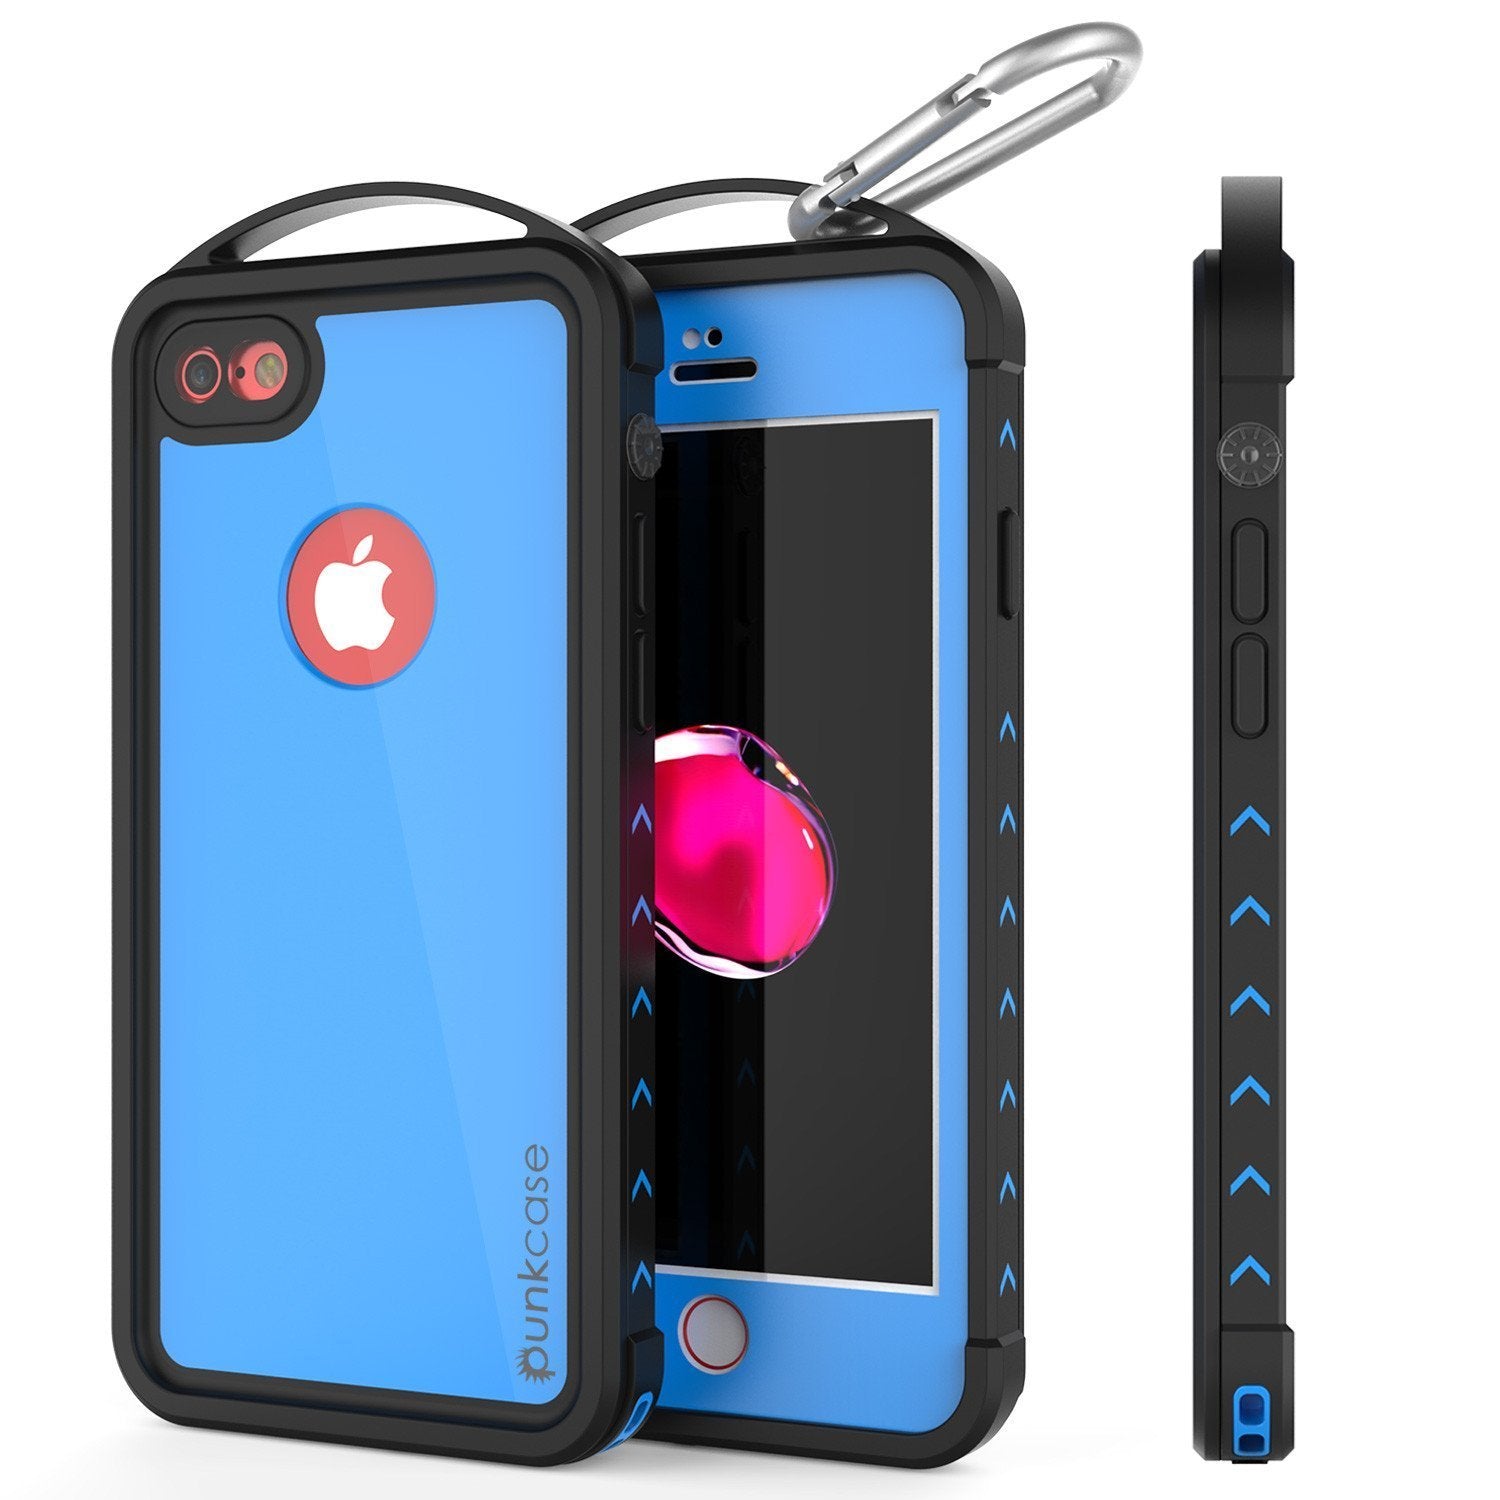 iPhone SE (4.7") Waterproof Case, Punkcase ALPINE Series, Light Blue | Heavy Duty Armor Cover (Color in image: light blue)